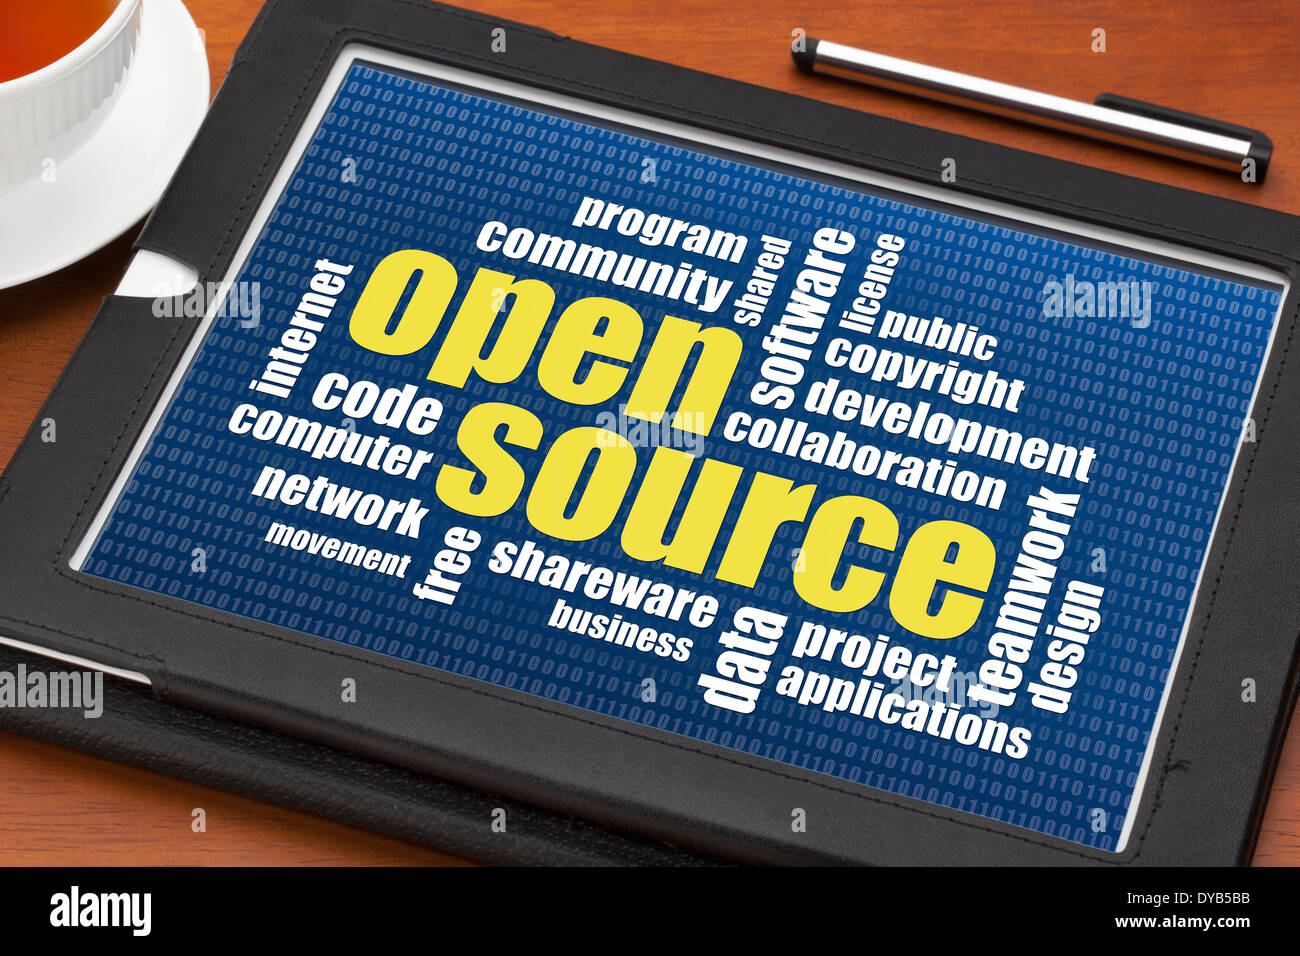 computer software development concept - open source word cloud on a digital tablet Stock Photo